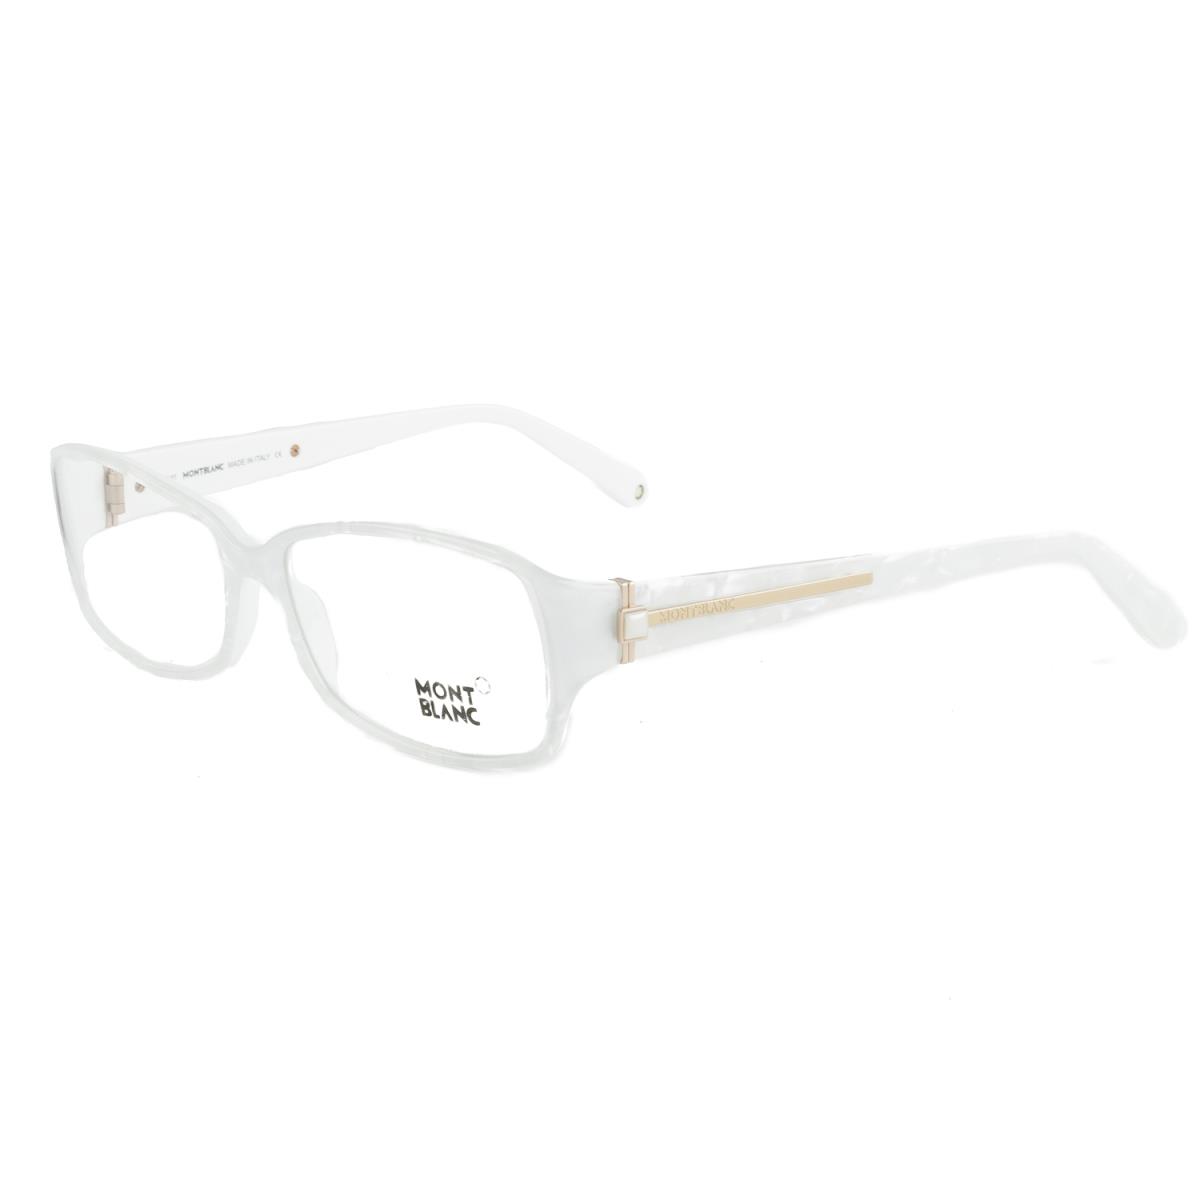 Montblanc Rectangular Eyeglass Frames 56mm MB380 021 - White